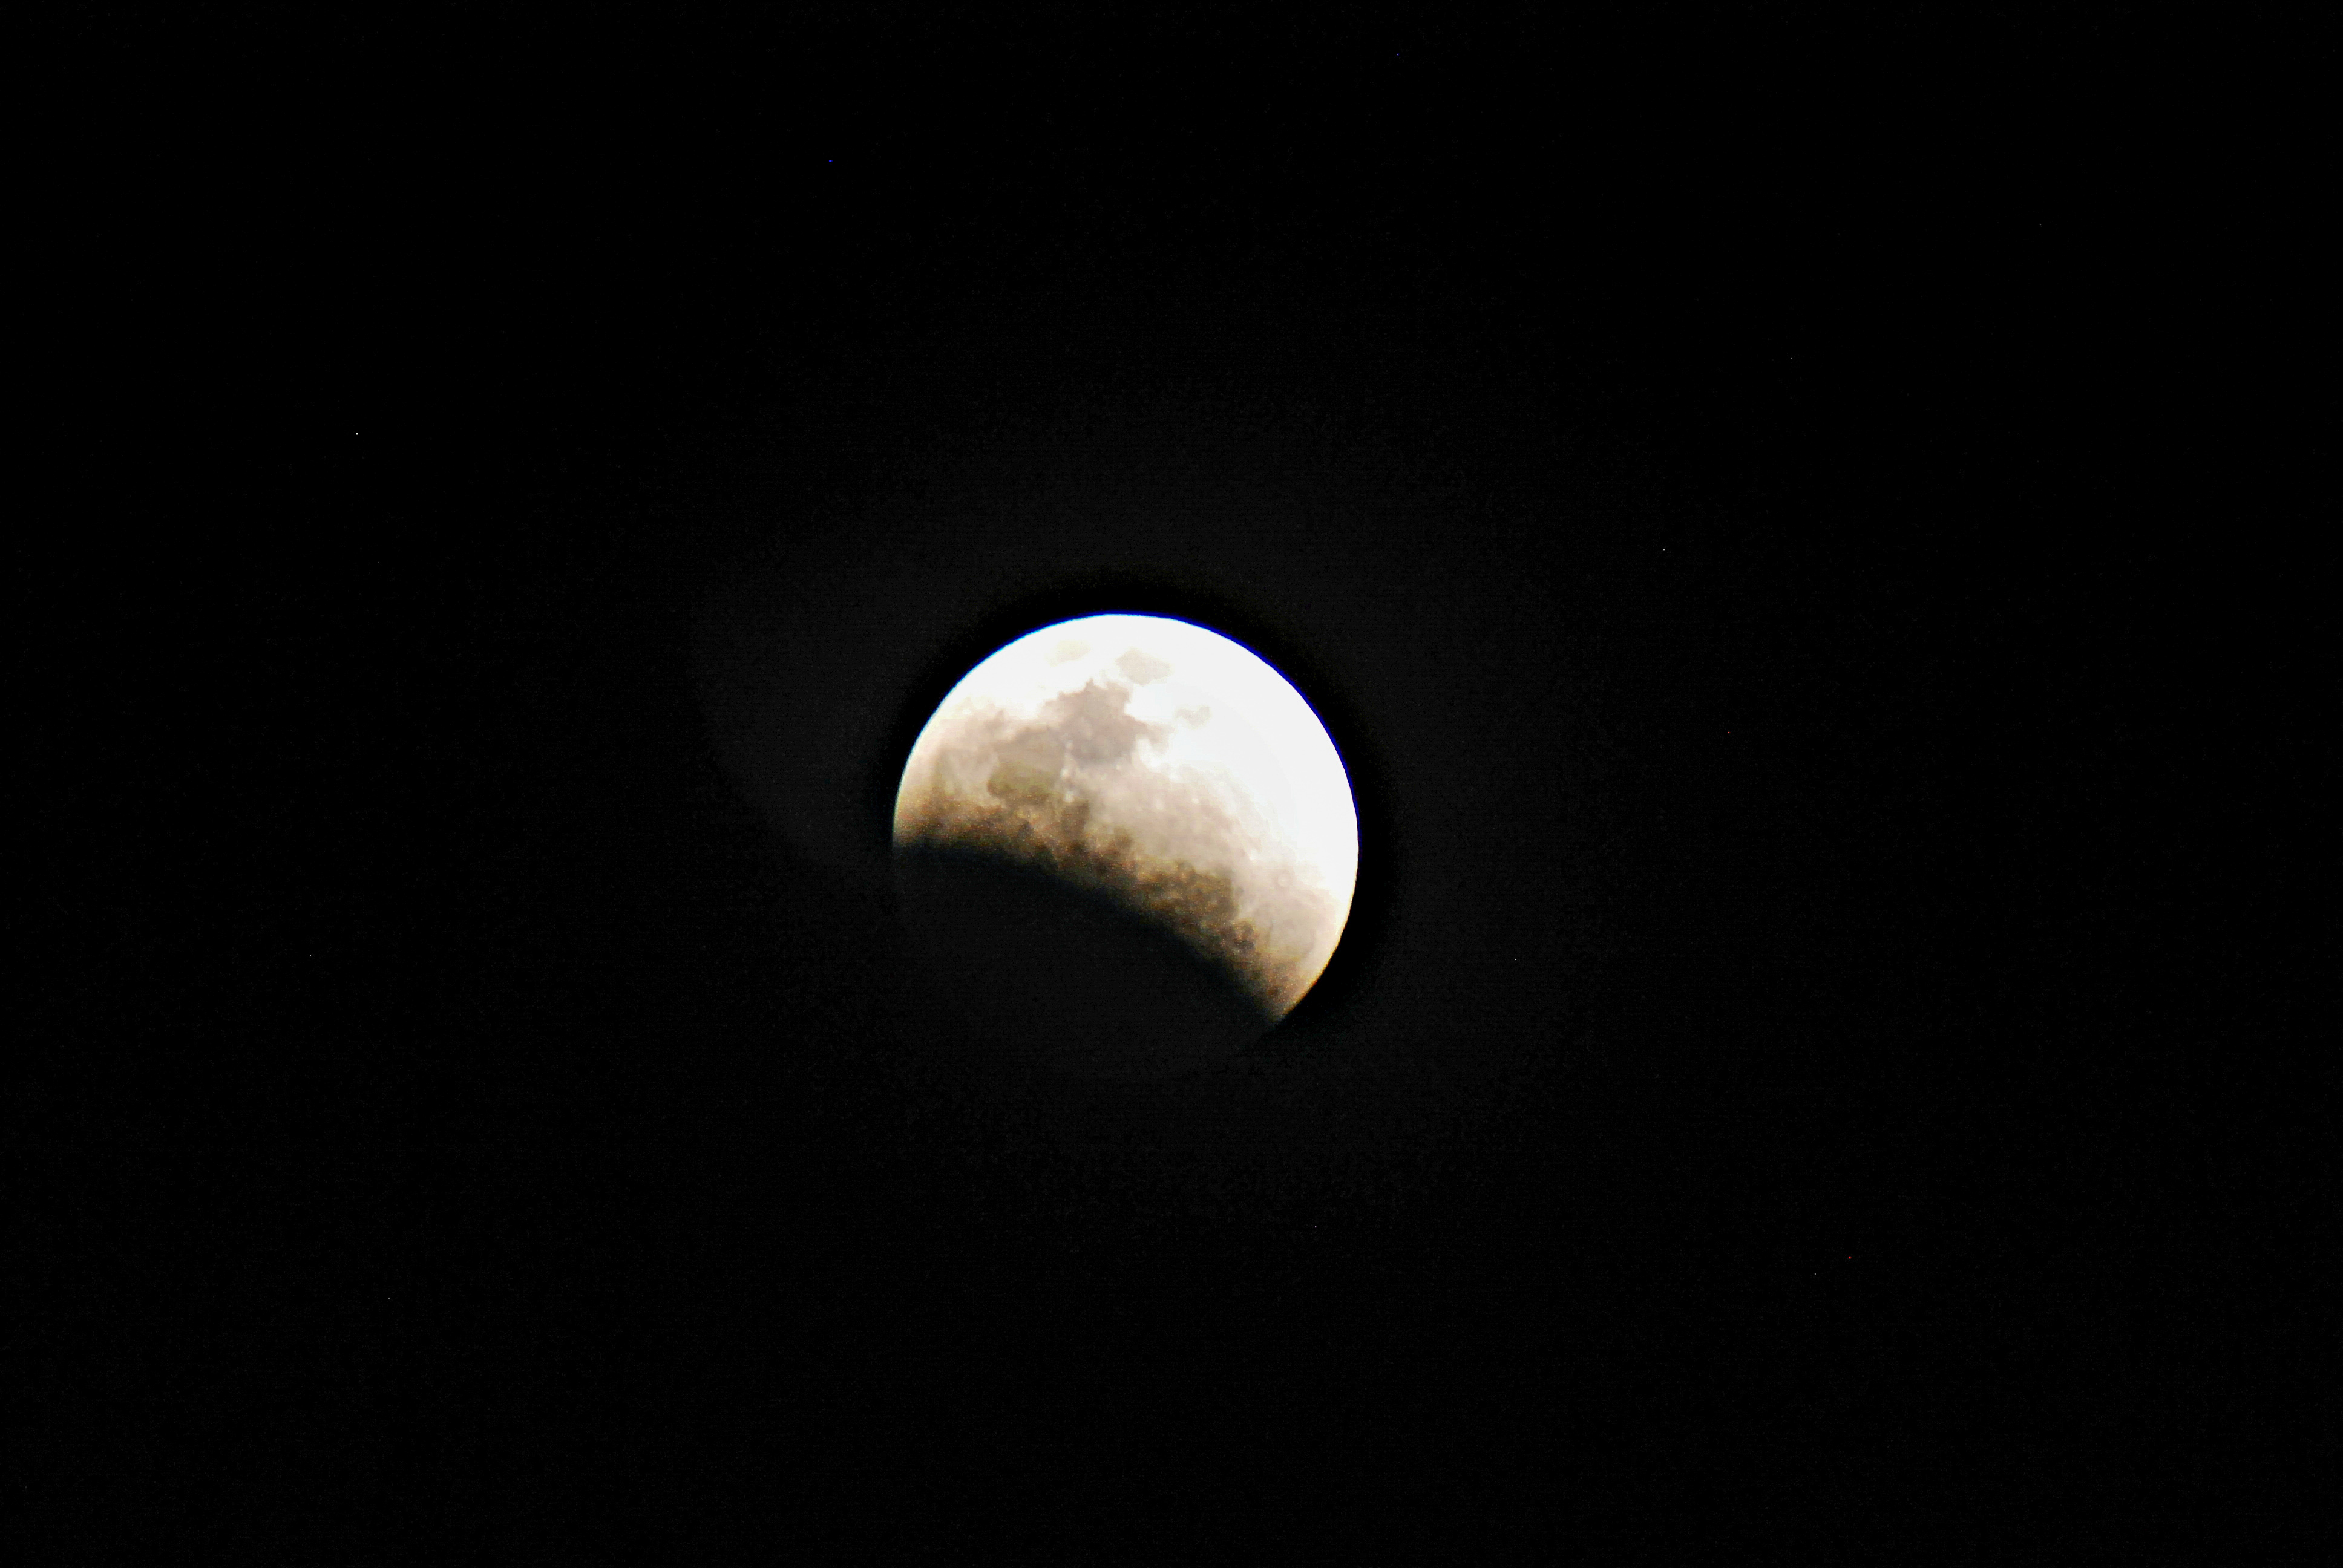 Image of a lunar eclipse